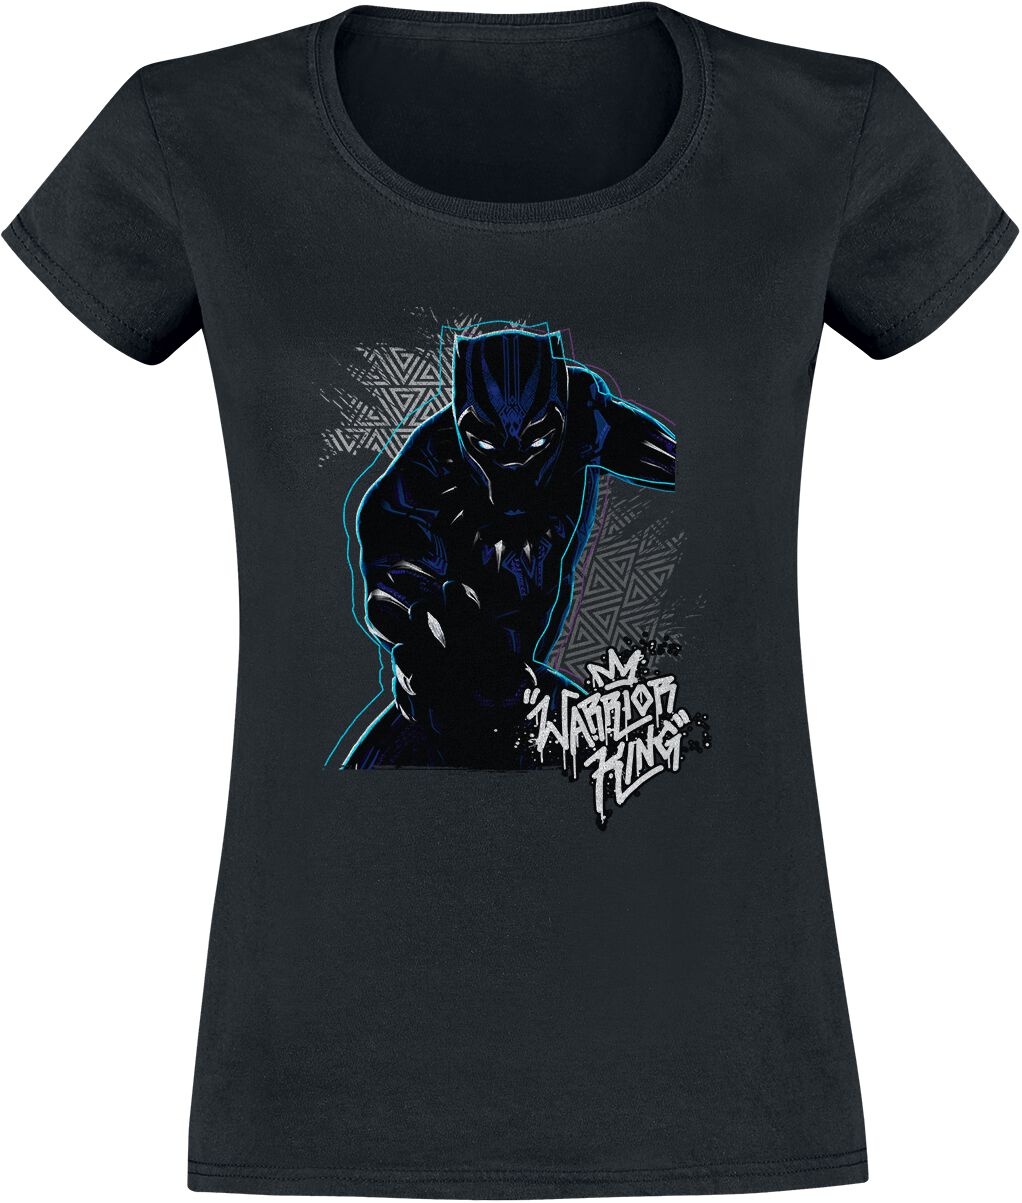 Black Panther Warrior Prince T-Shirt black